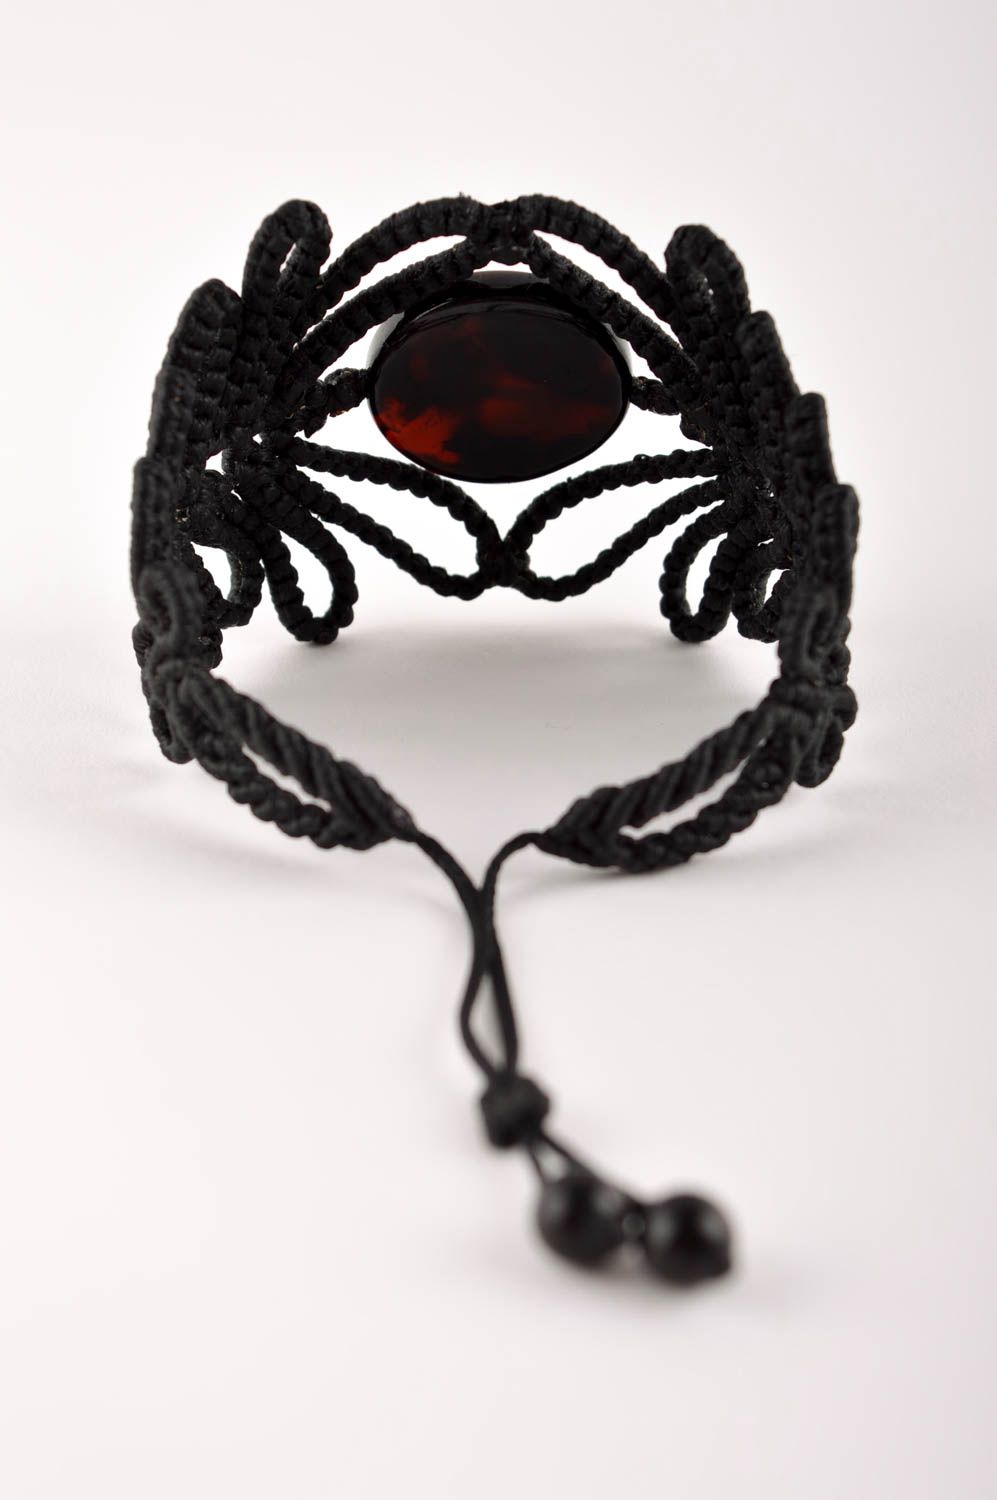 Unusual handmade woven bracelet macrame bracelet designs gifts for her photo 4